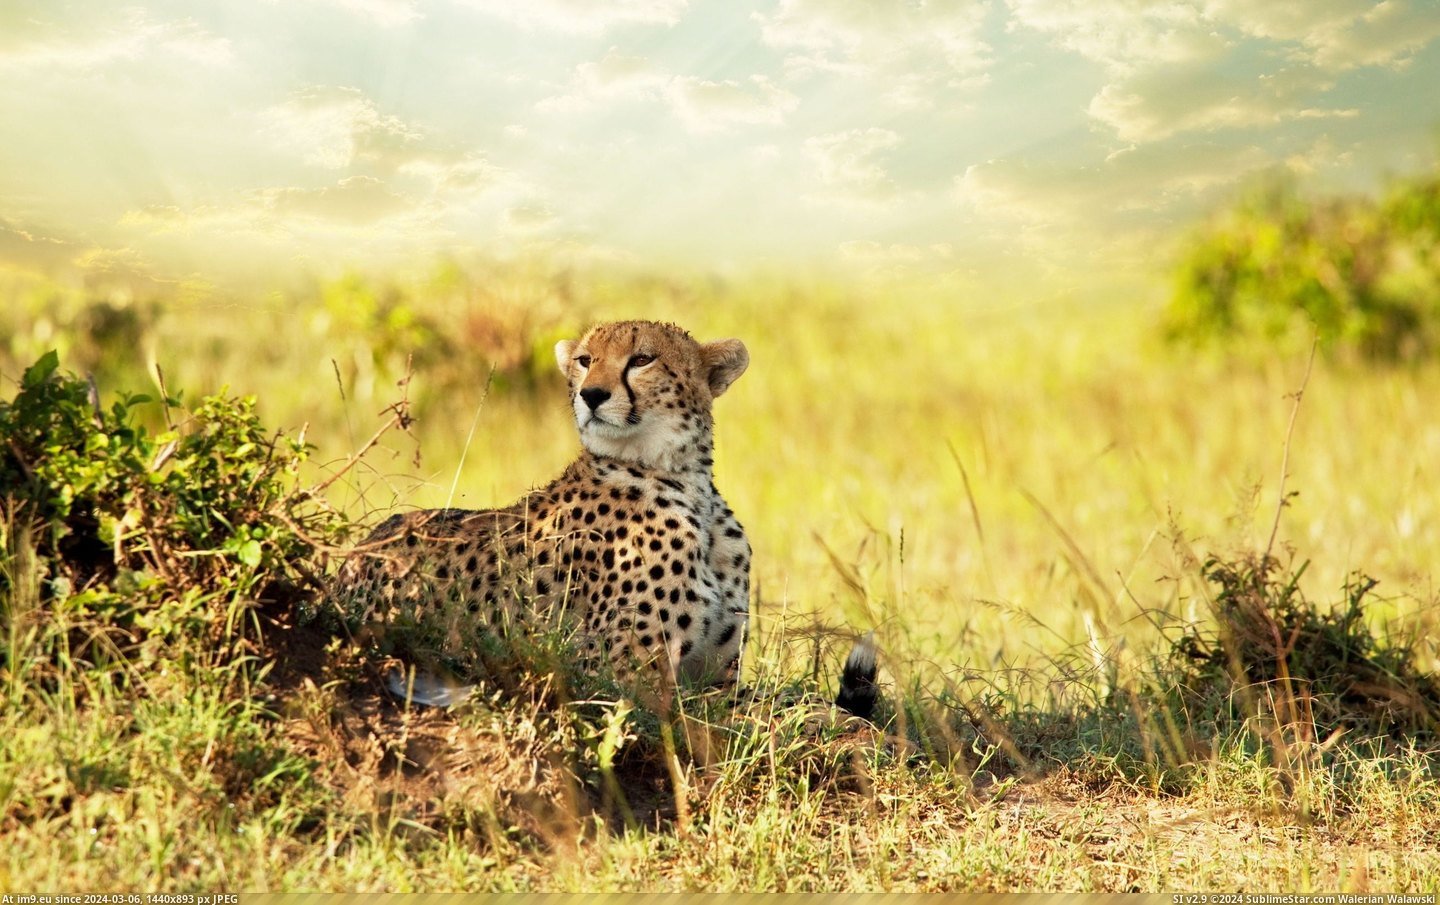 #Wallpaper #Wide #Savanna #Africa #Cheetah Cheetah Savanna Africa Wide HD Wallpaper Pic. (Bild von album Unique HD Wallpapers))